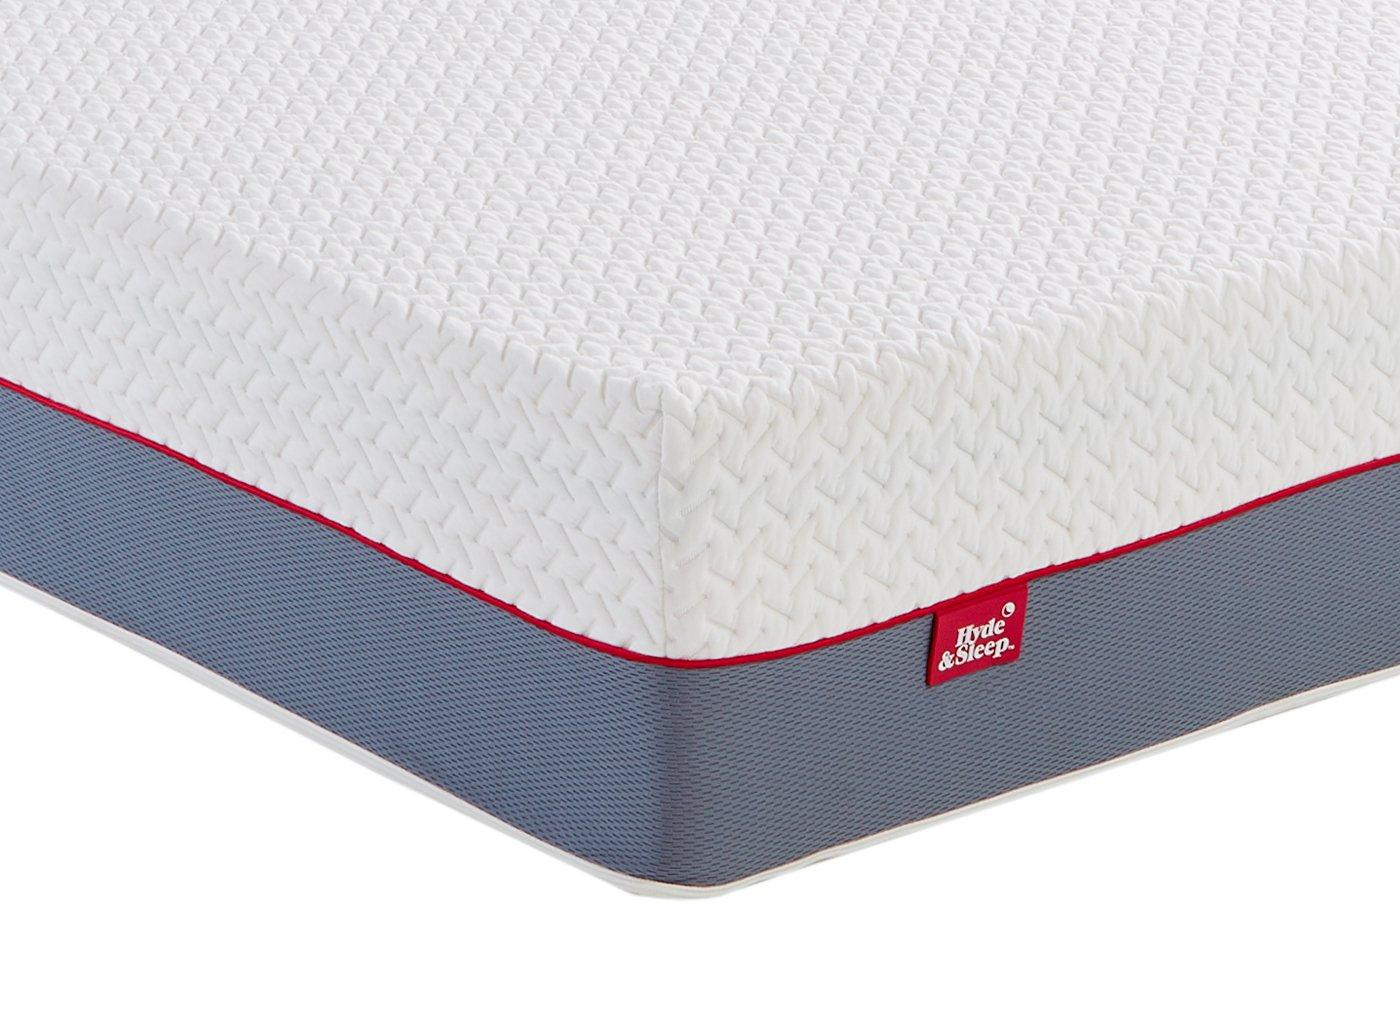 hyde and sleep mattress warranty